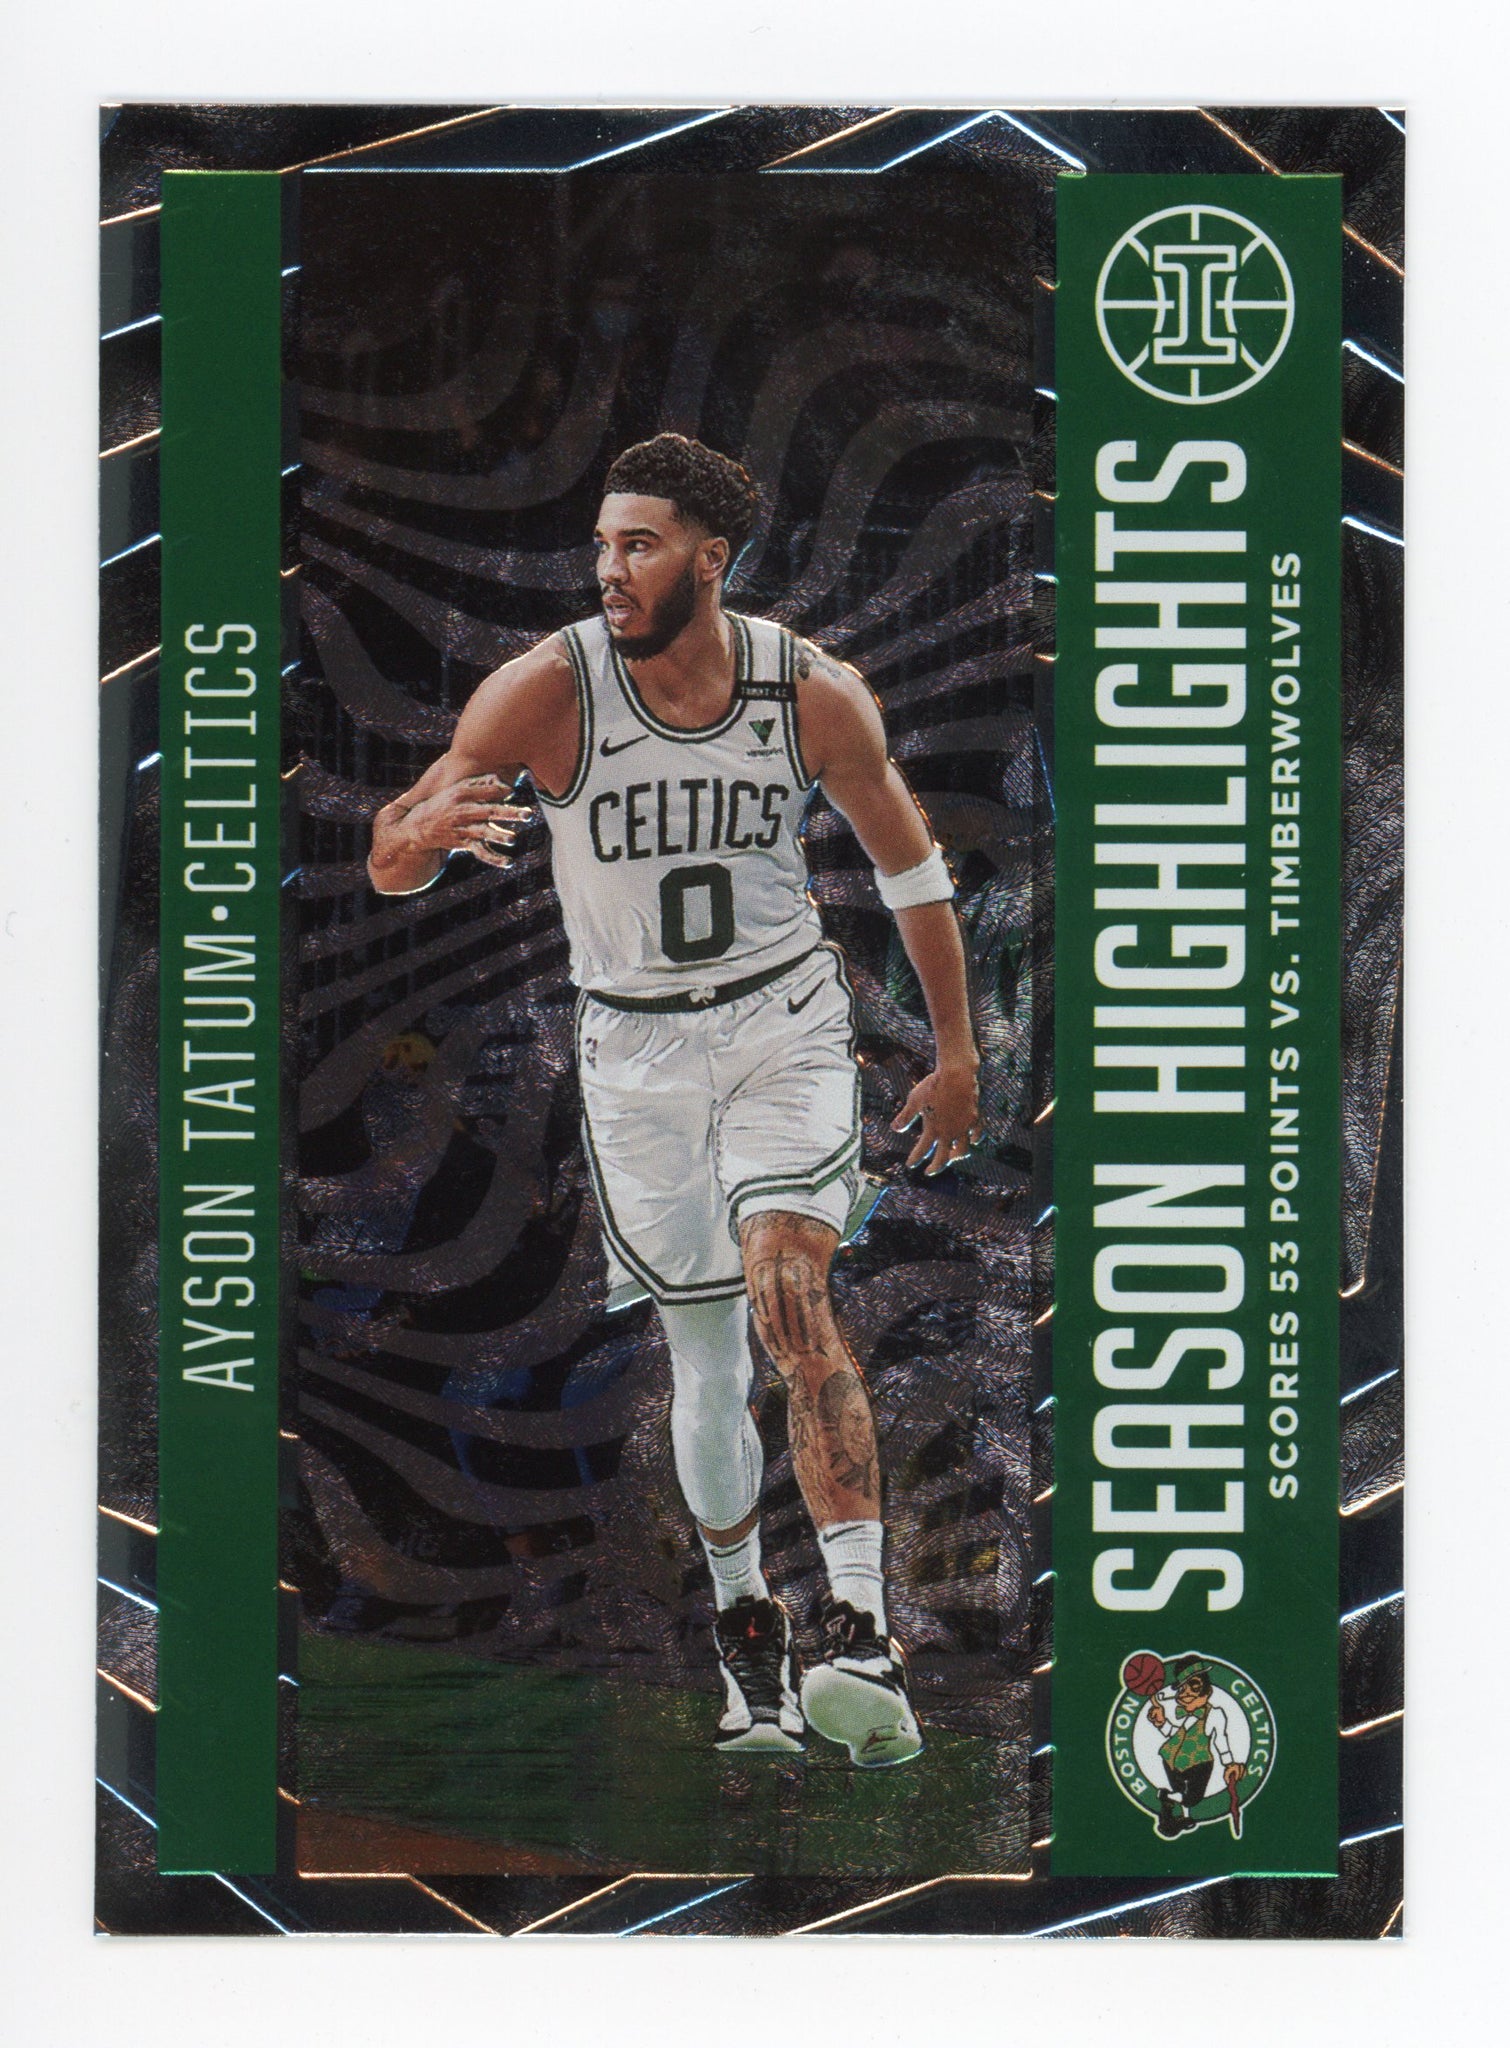 2020-2021 Jayson Tatum Season Highlights Panini Illusions Boston Celtics # 13